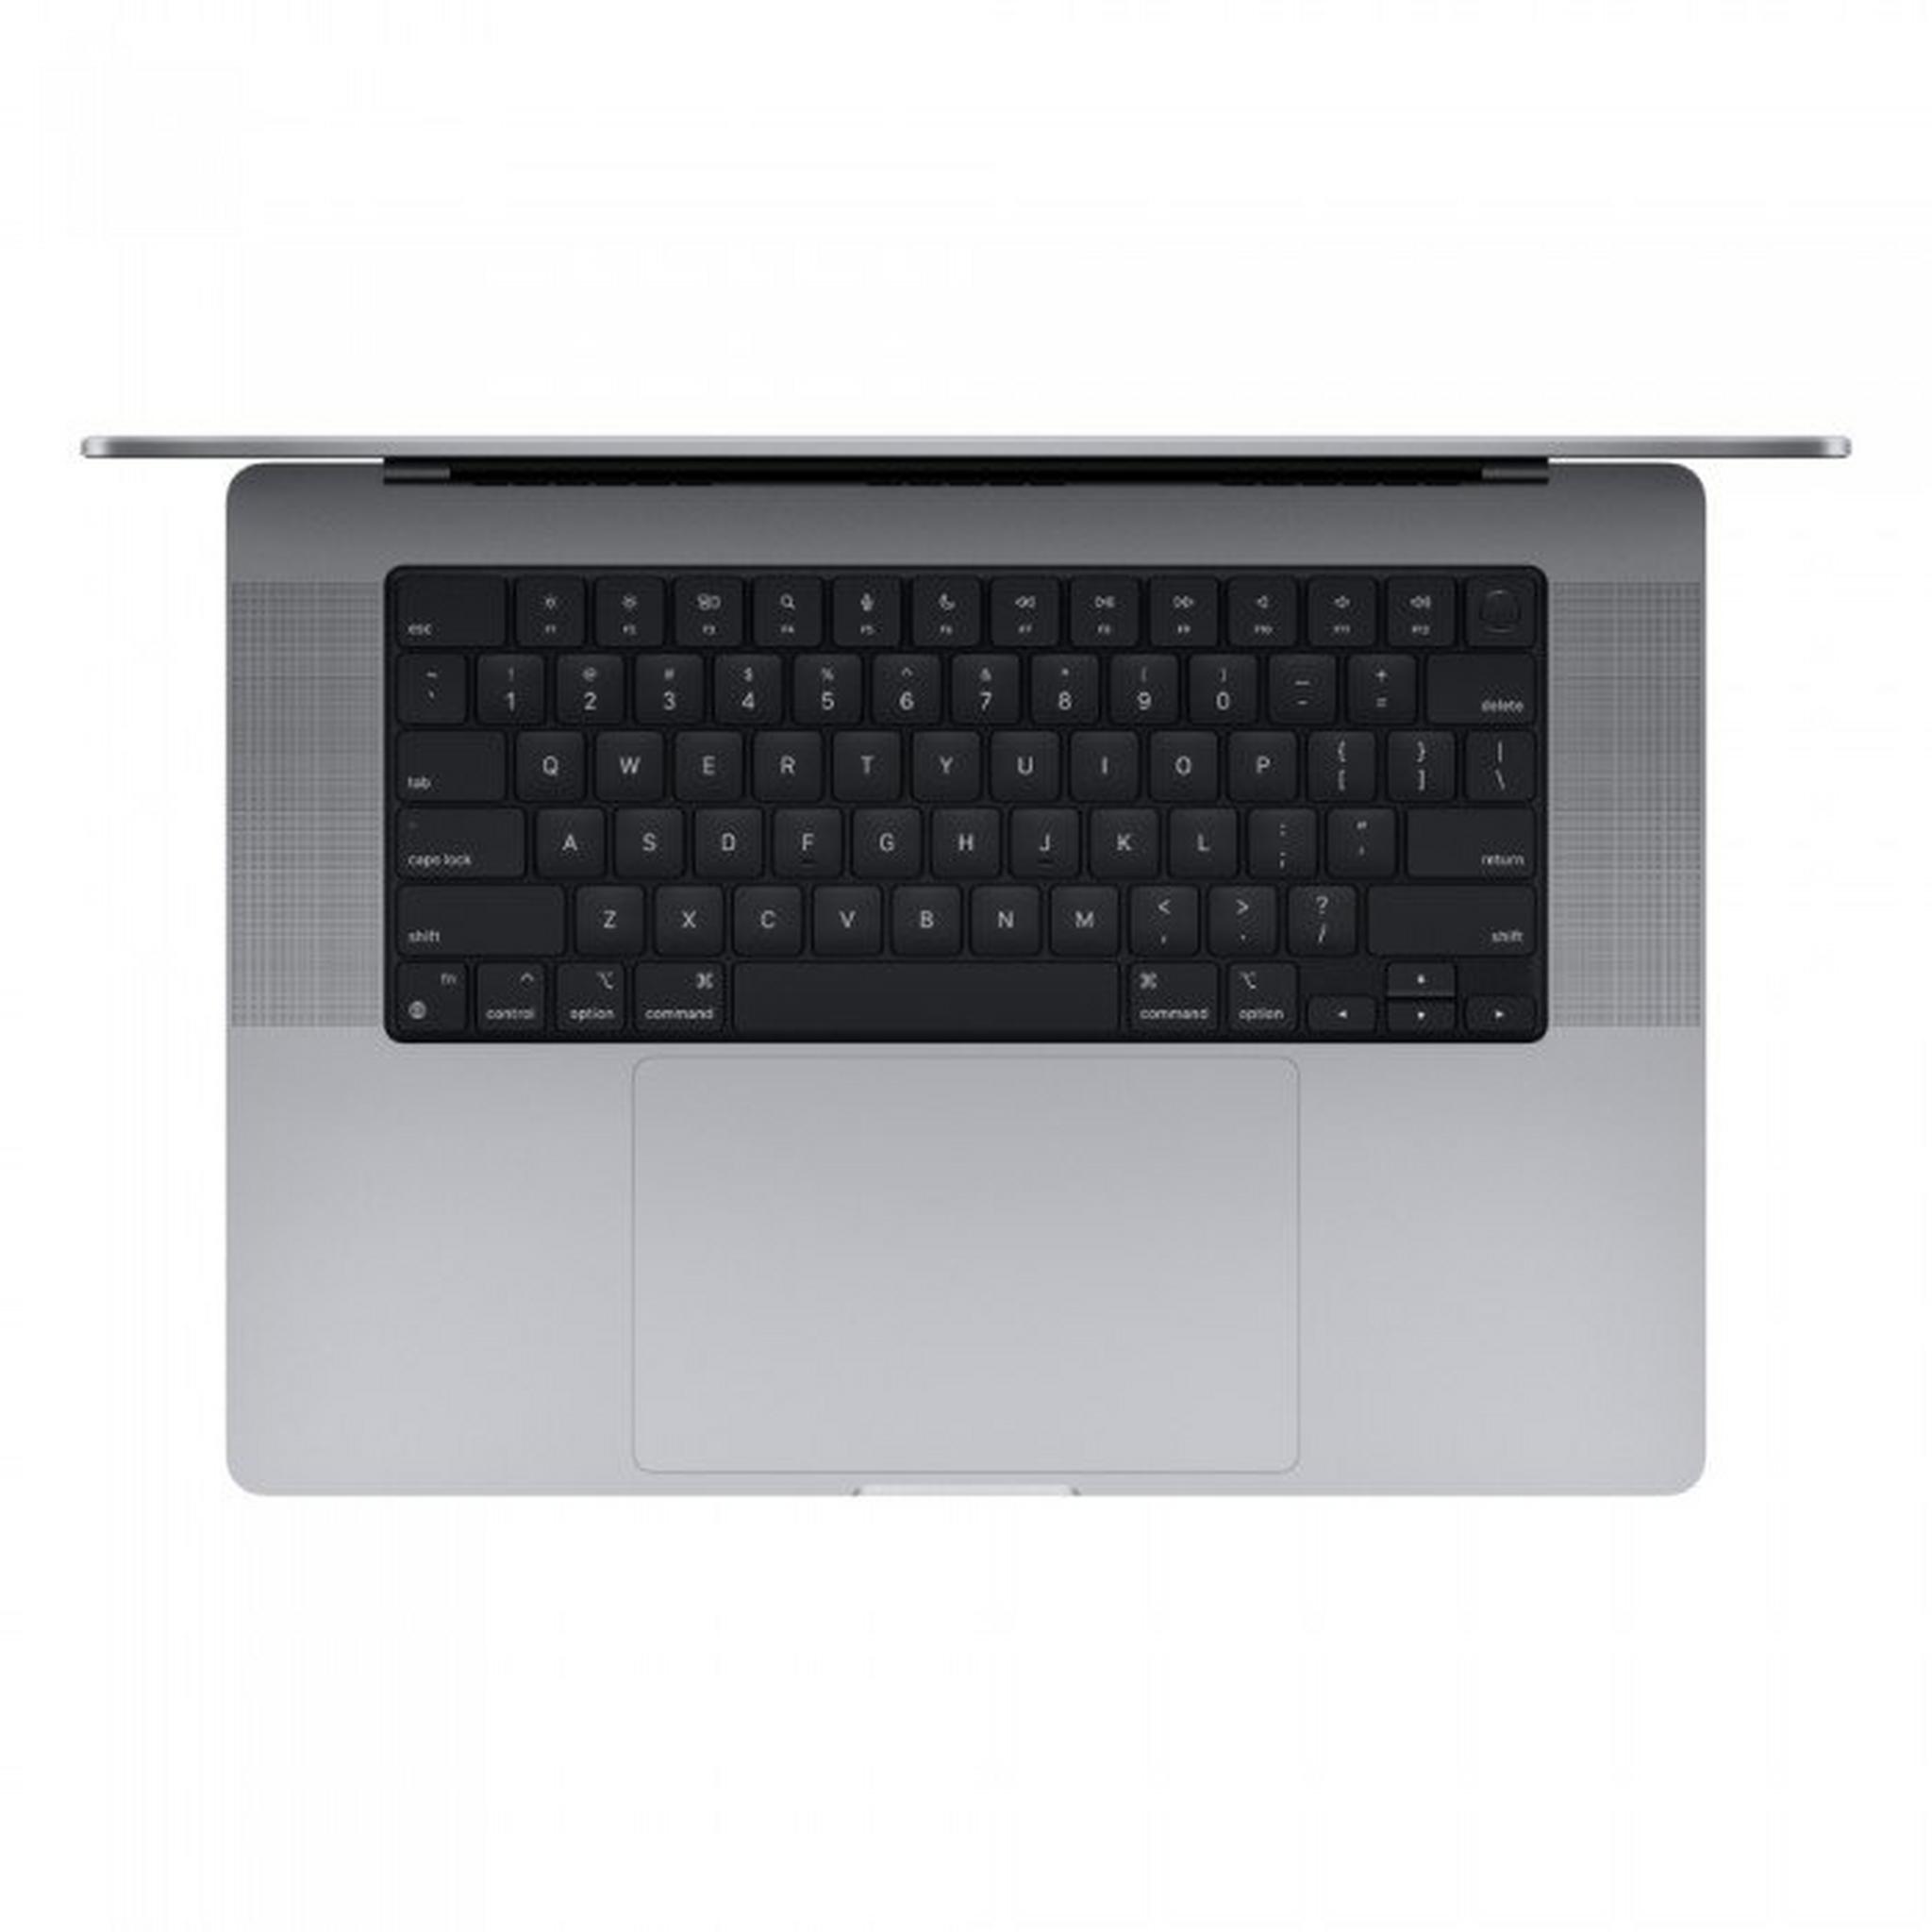 Apple MacBook M1 Pro (2021), 16GB RAM, 1TB SSD, 16-inch Laptop - Space Gray